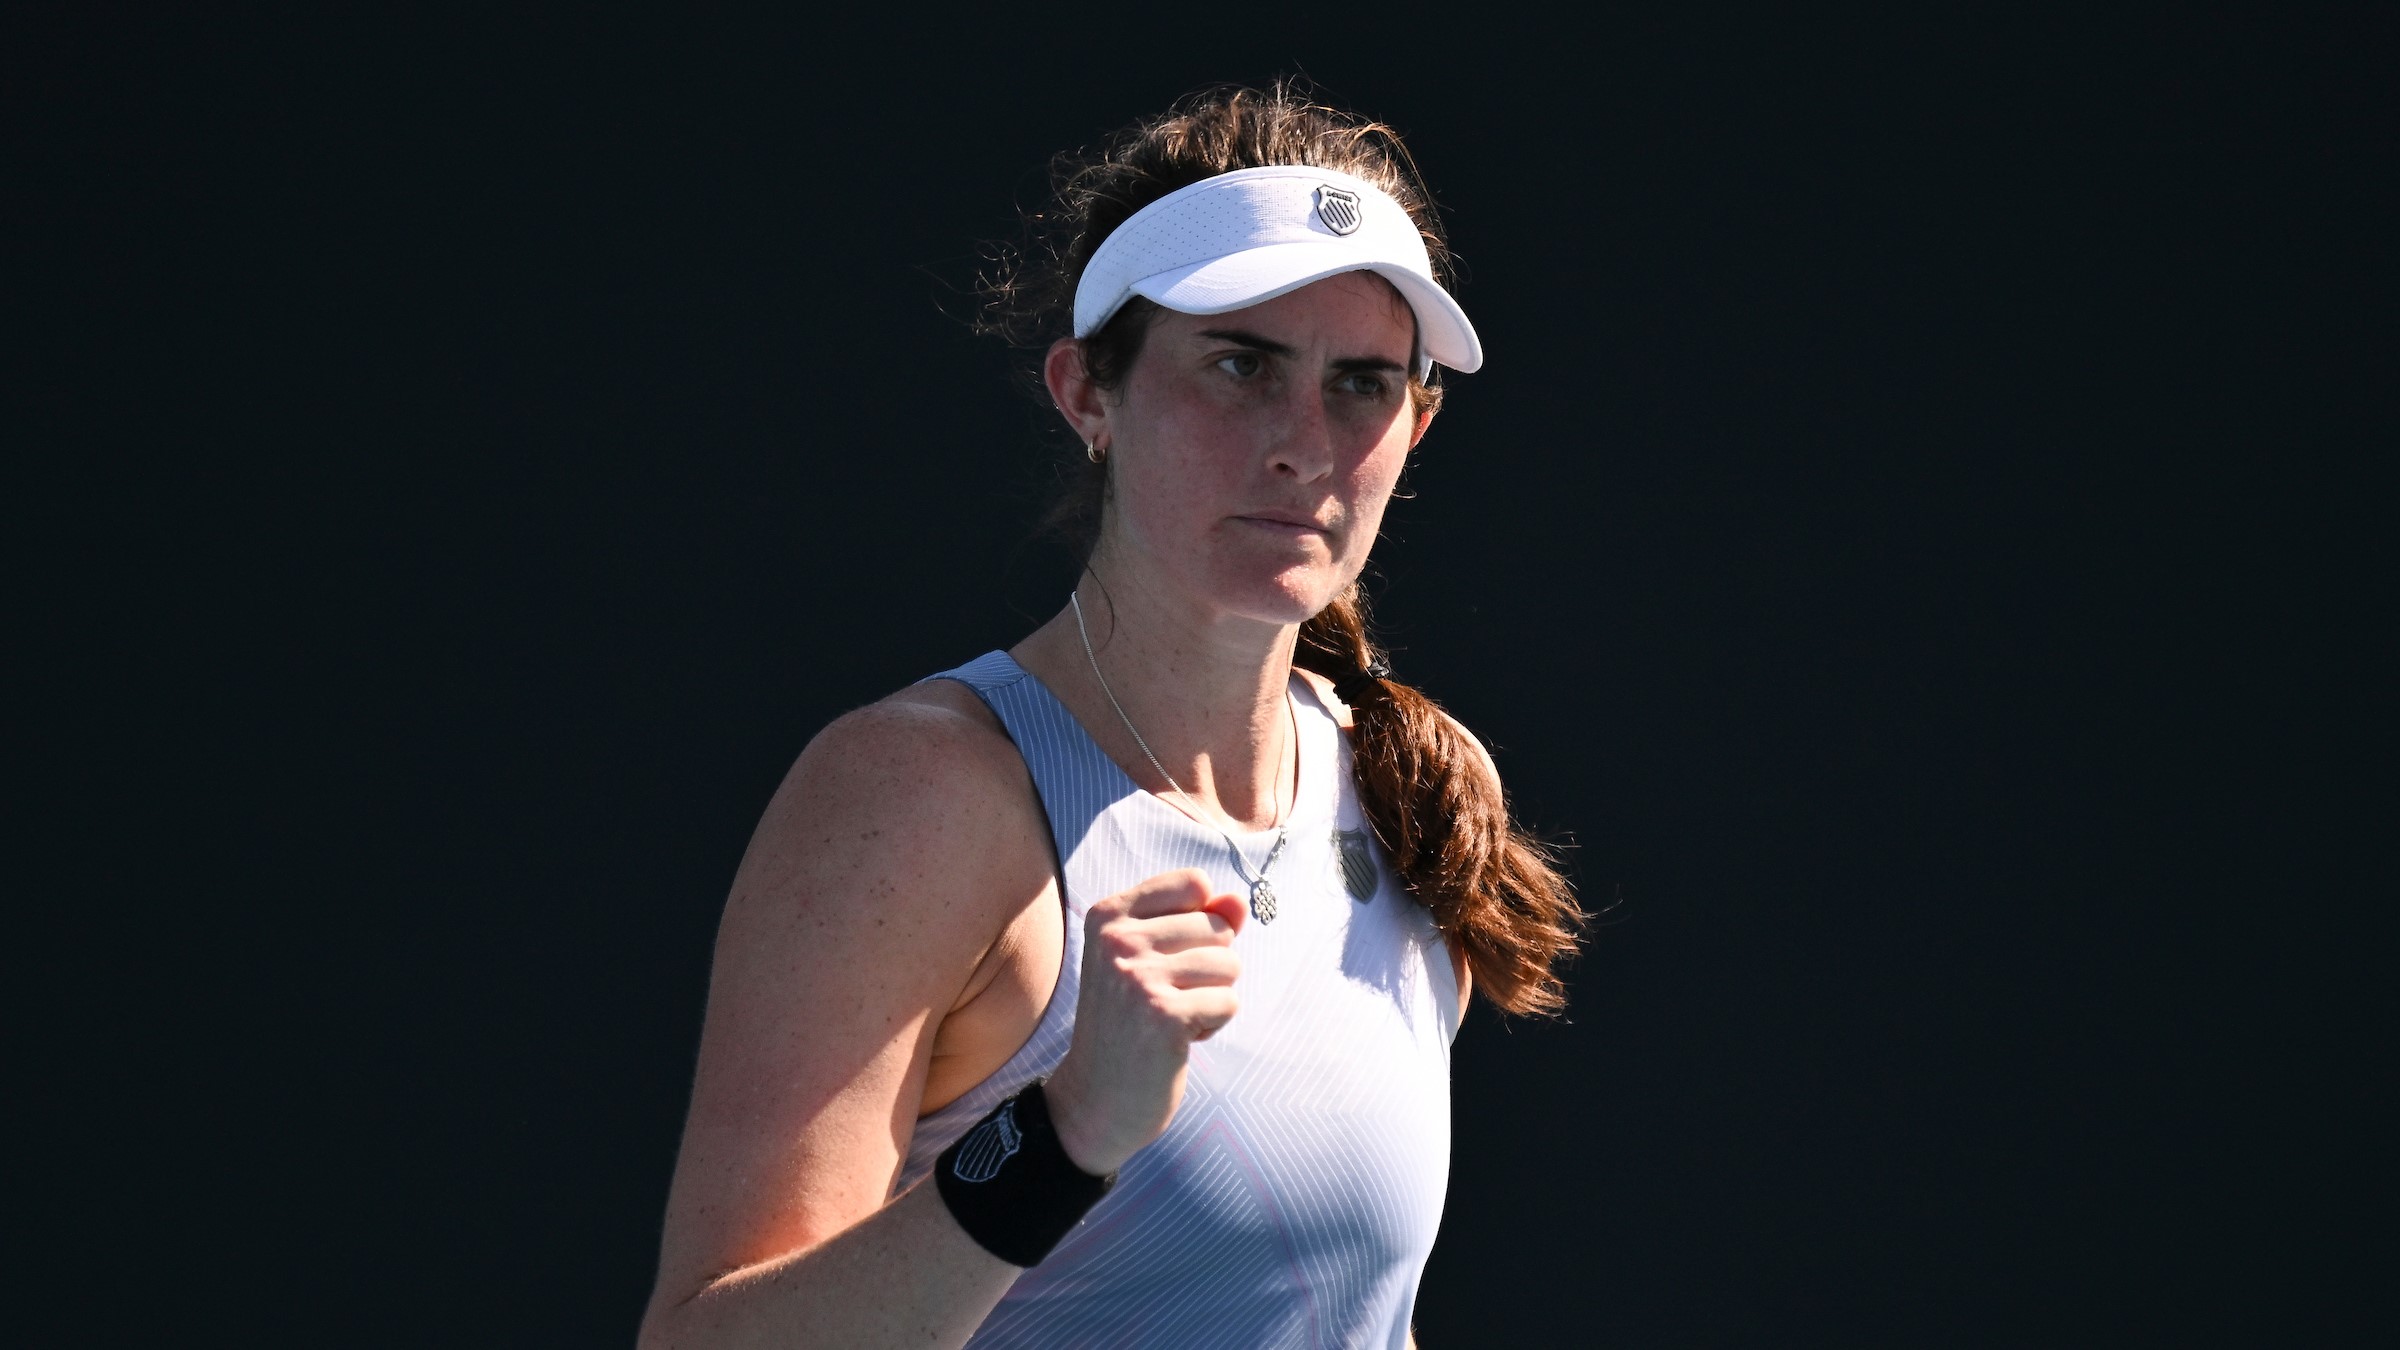 Rebecca Marino pumps her fist during an Australian Open qualifying match.